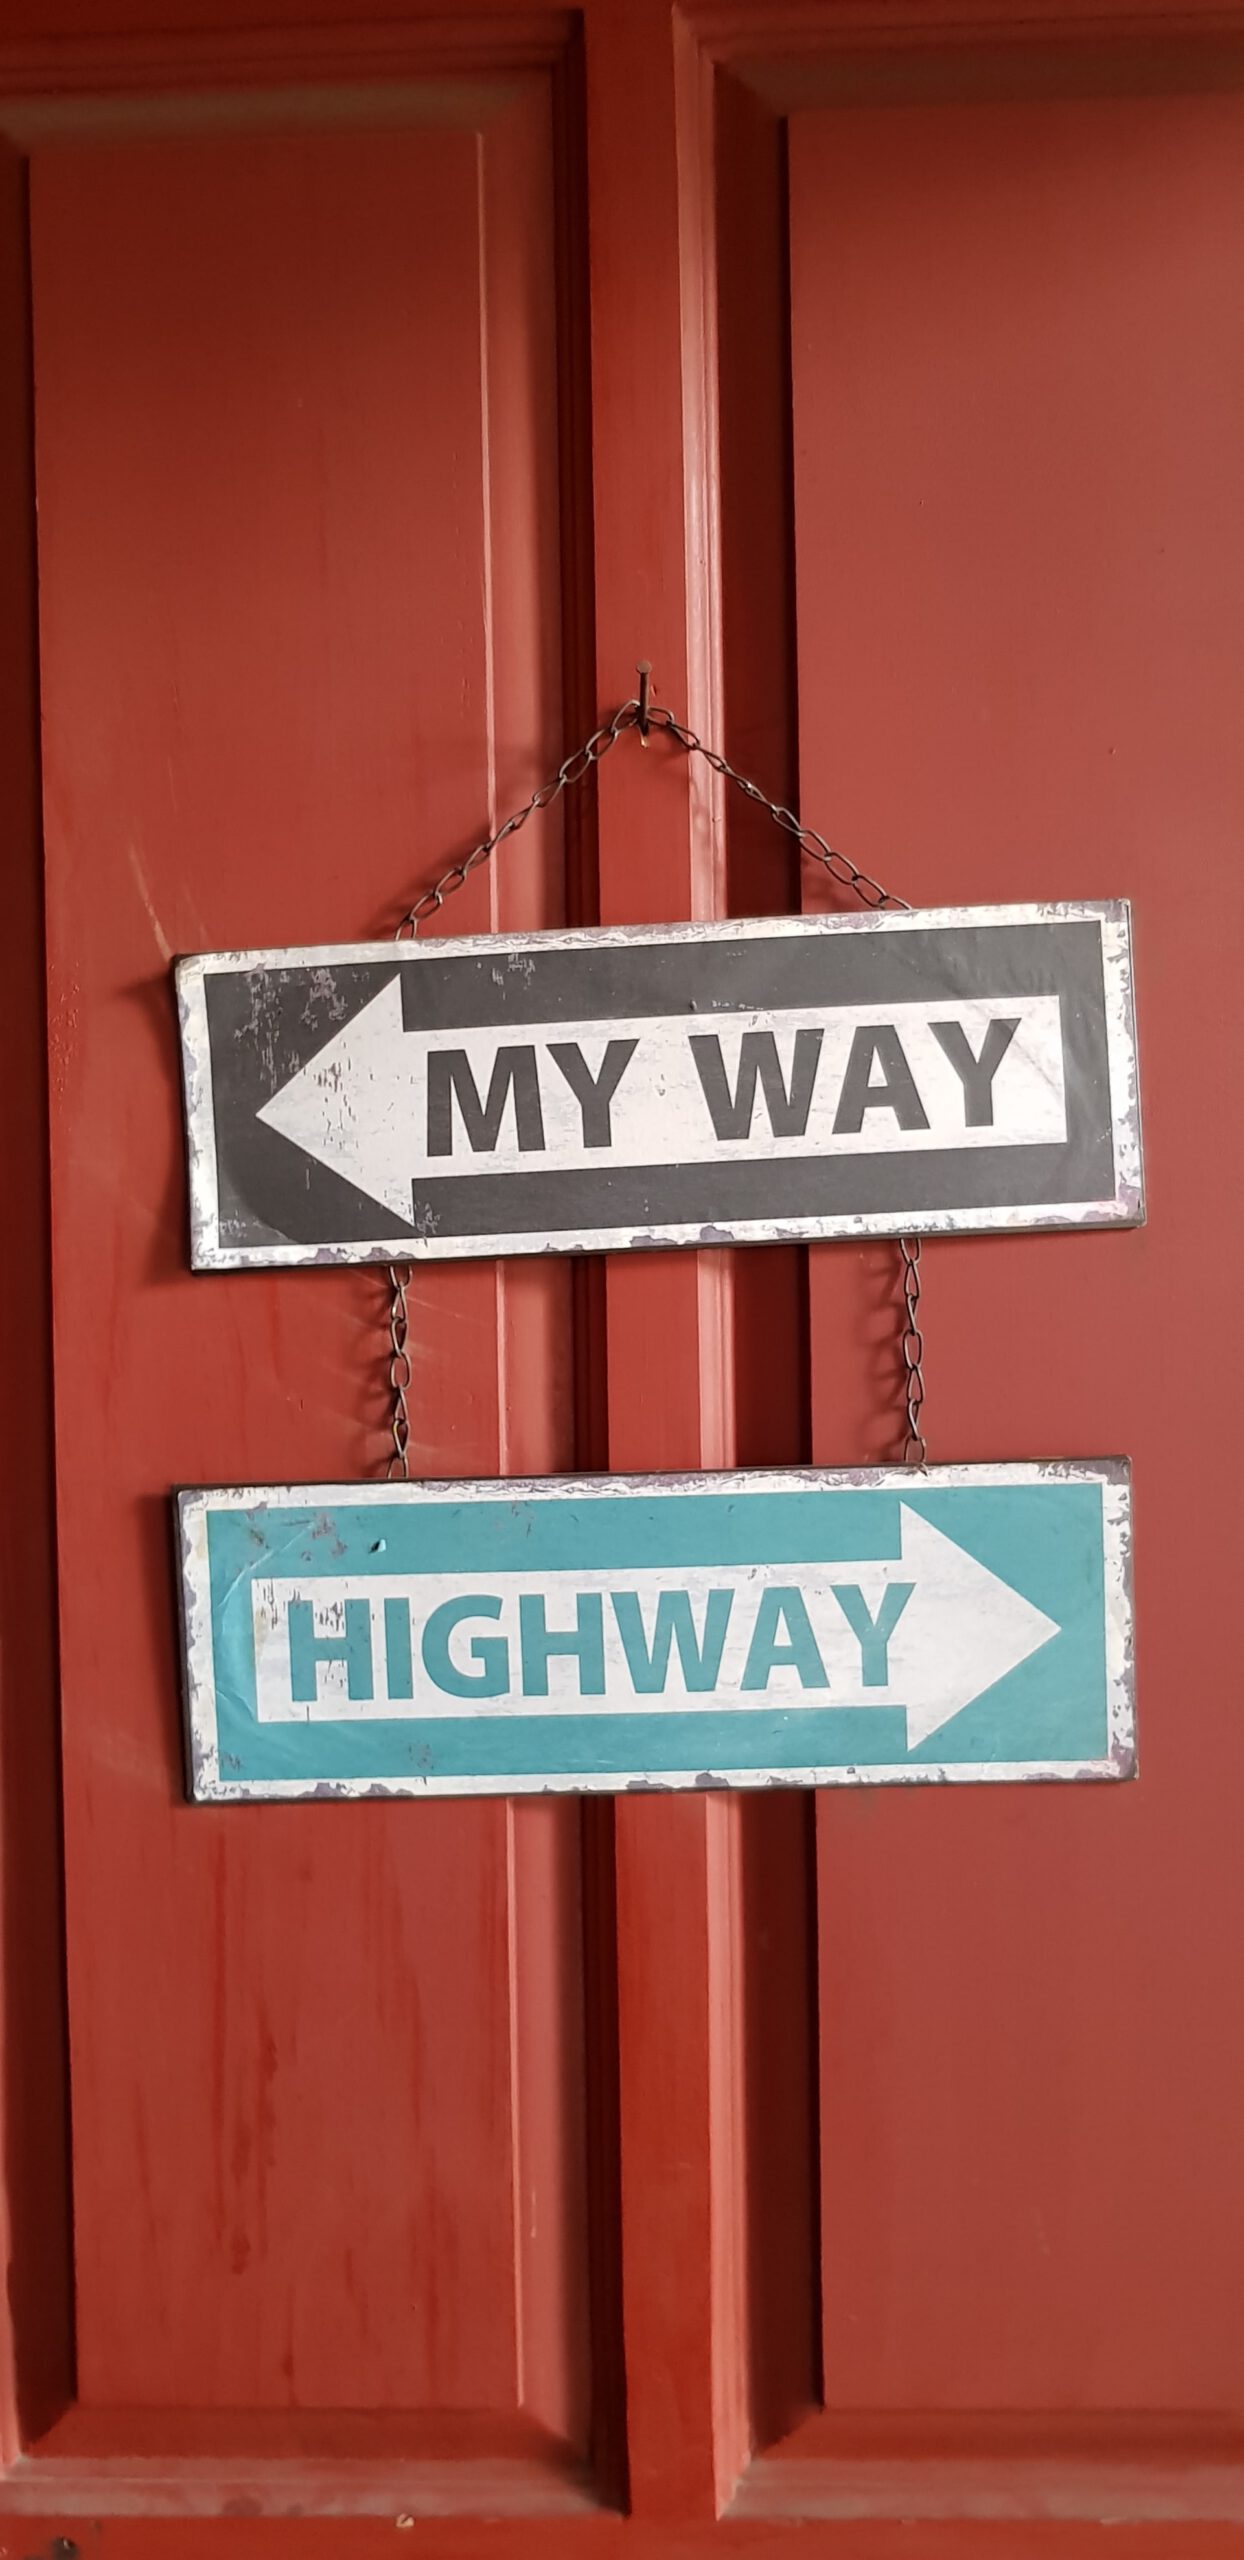 Highway or "My way" by Rommel Davila